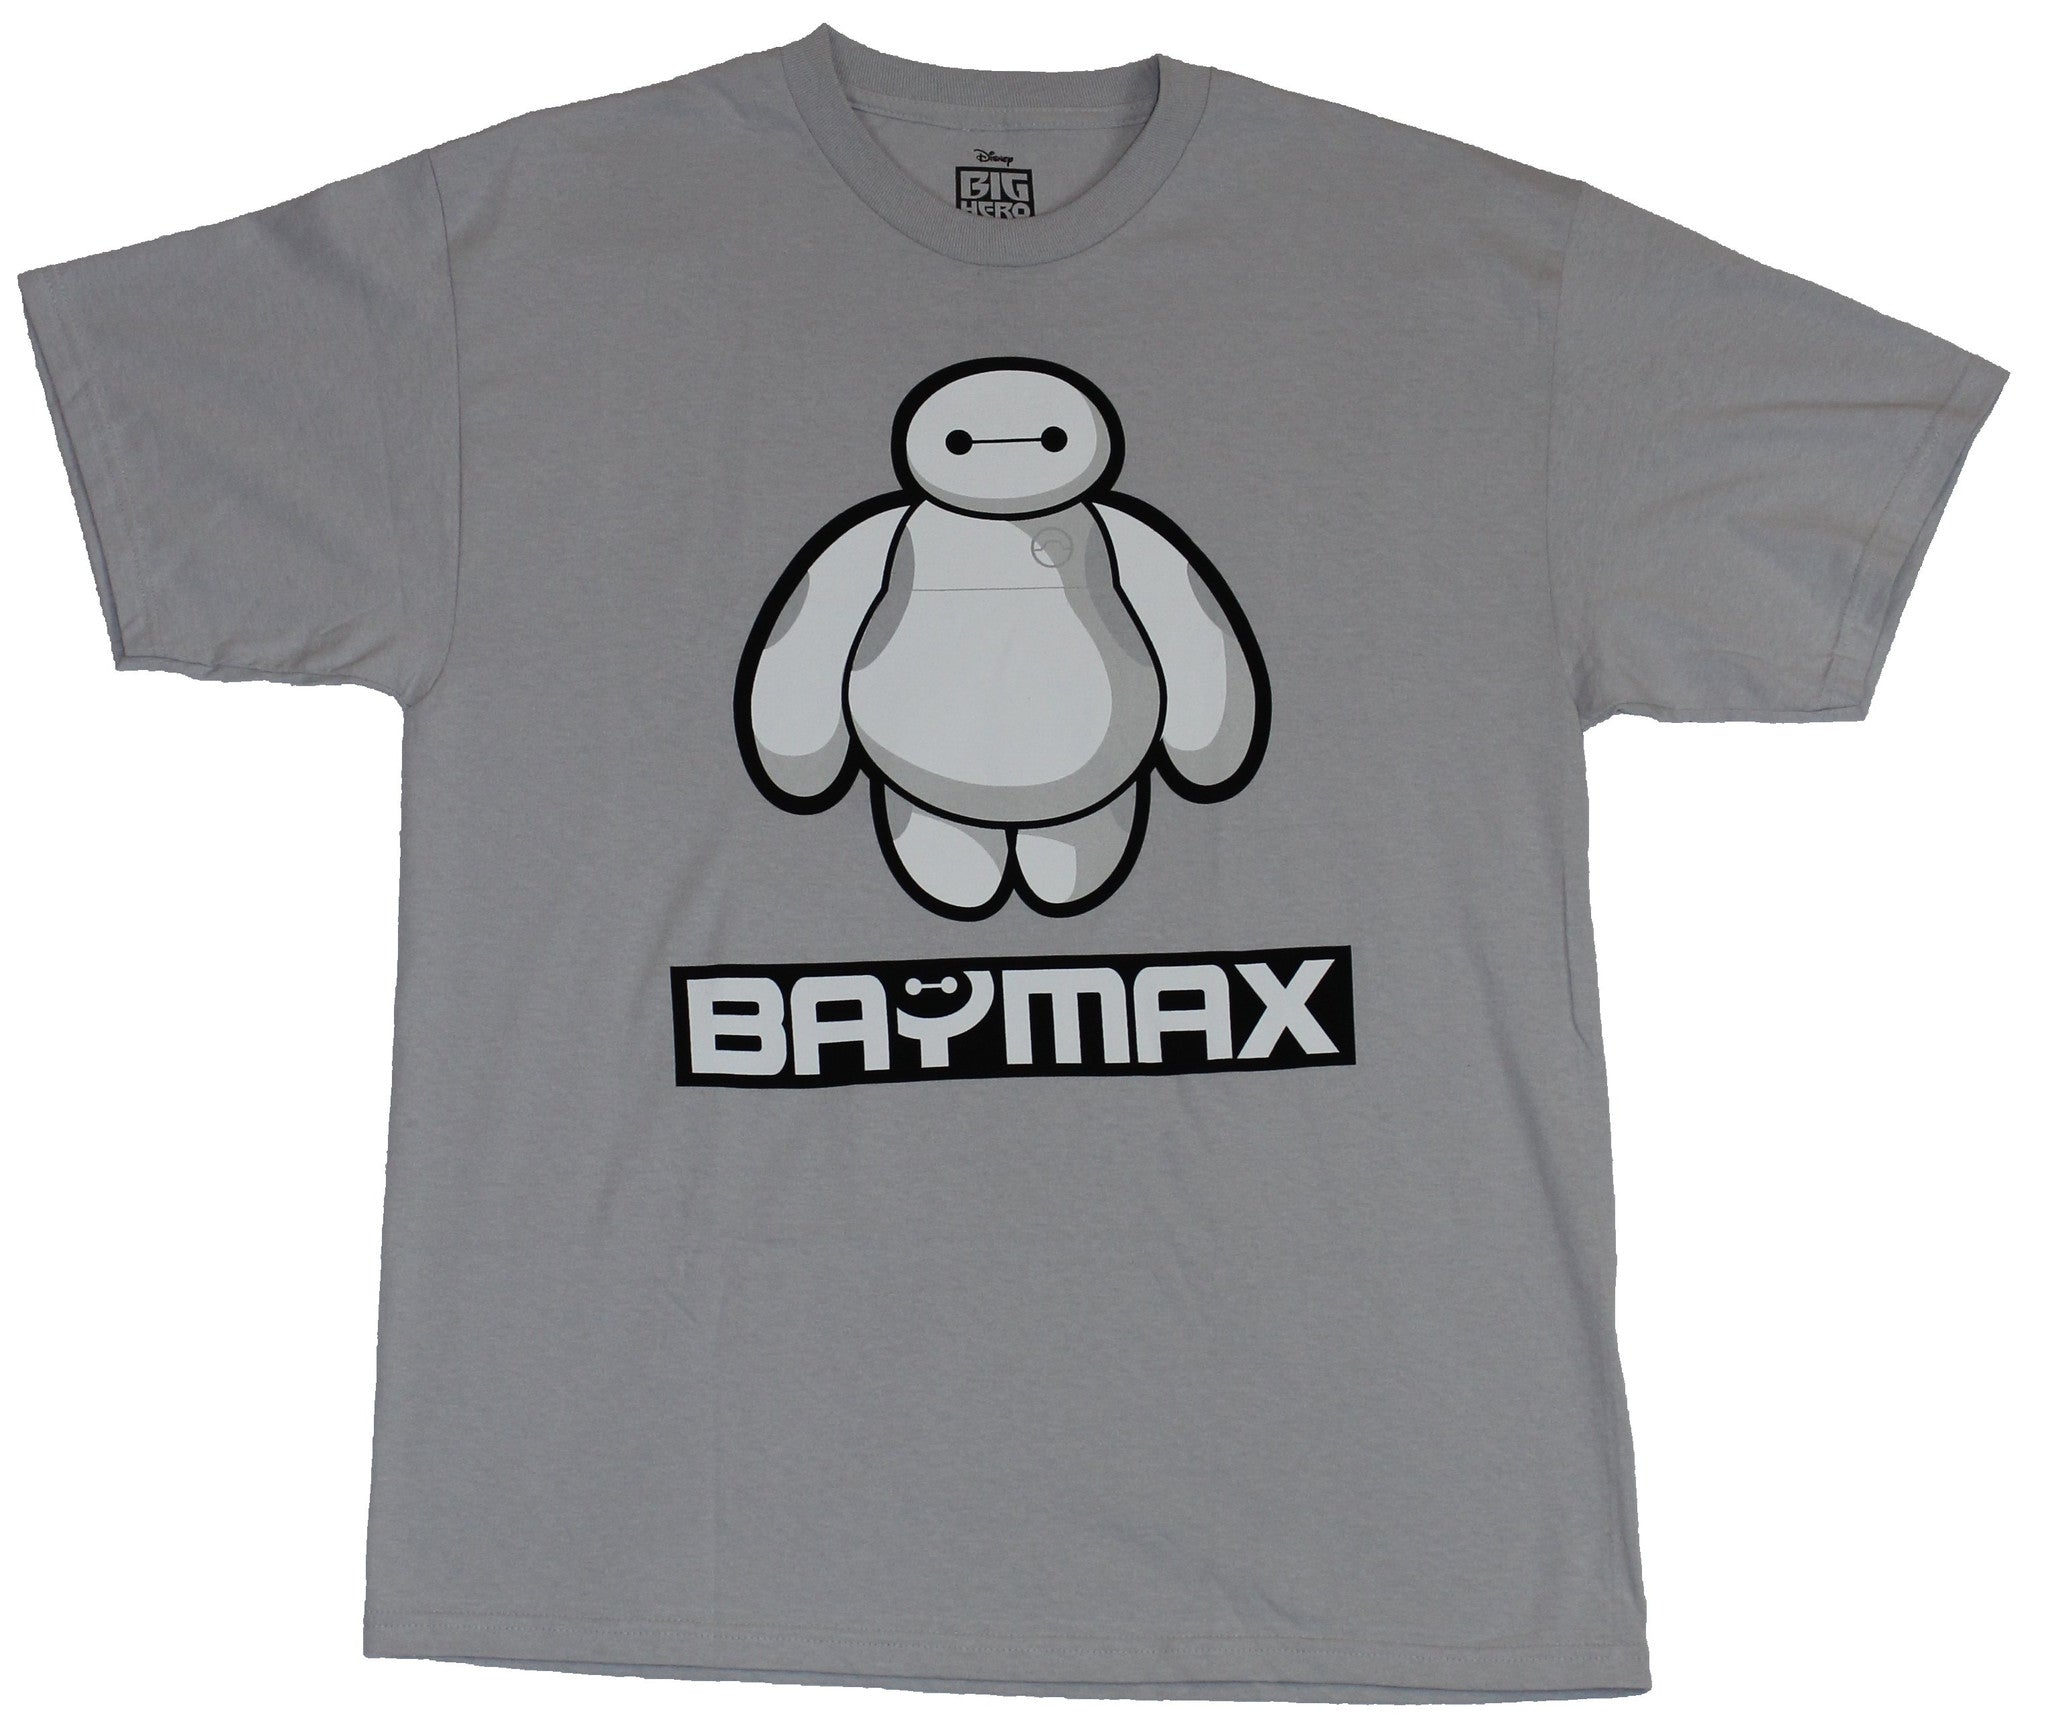 Big Hero Six Mens T-Shirt - Baymax Simple White Man Image (X-Large)